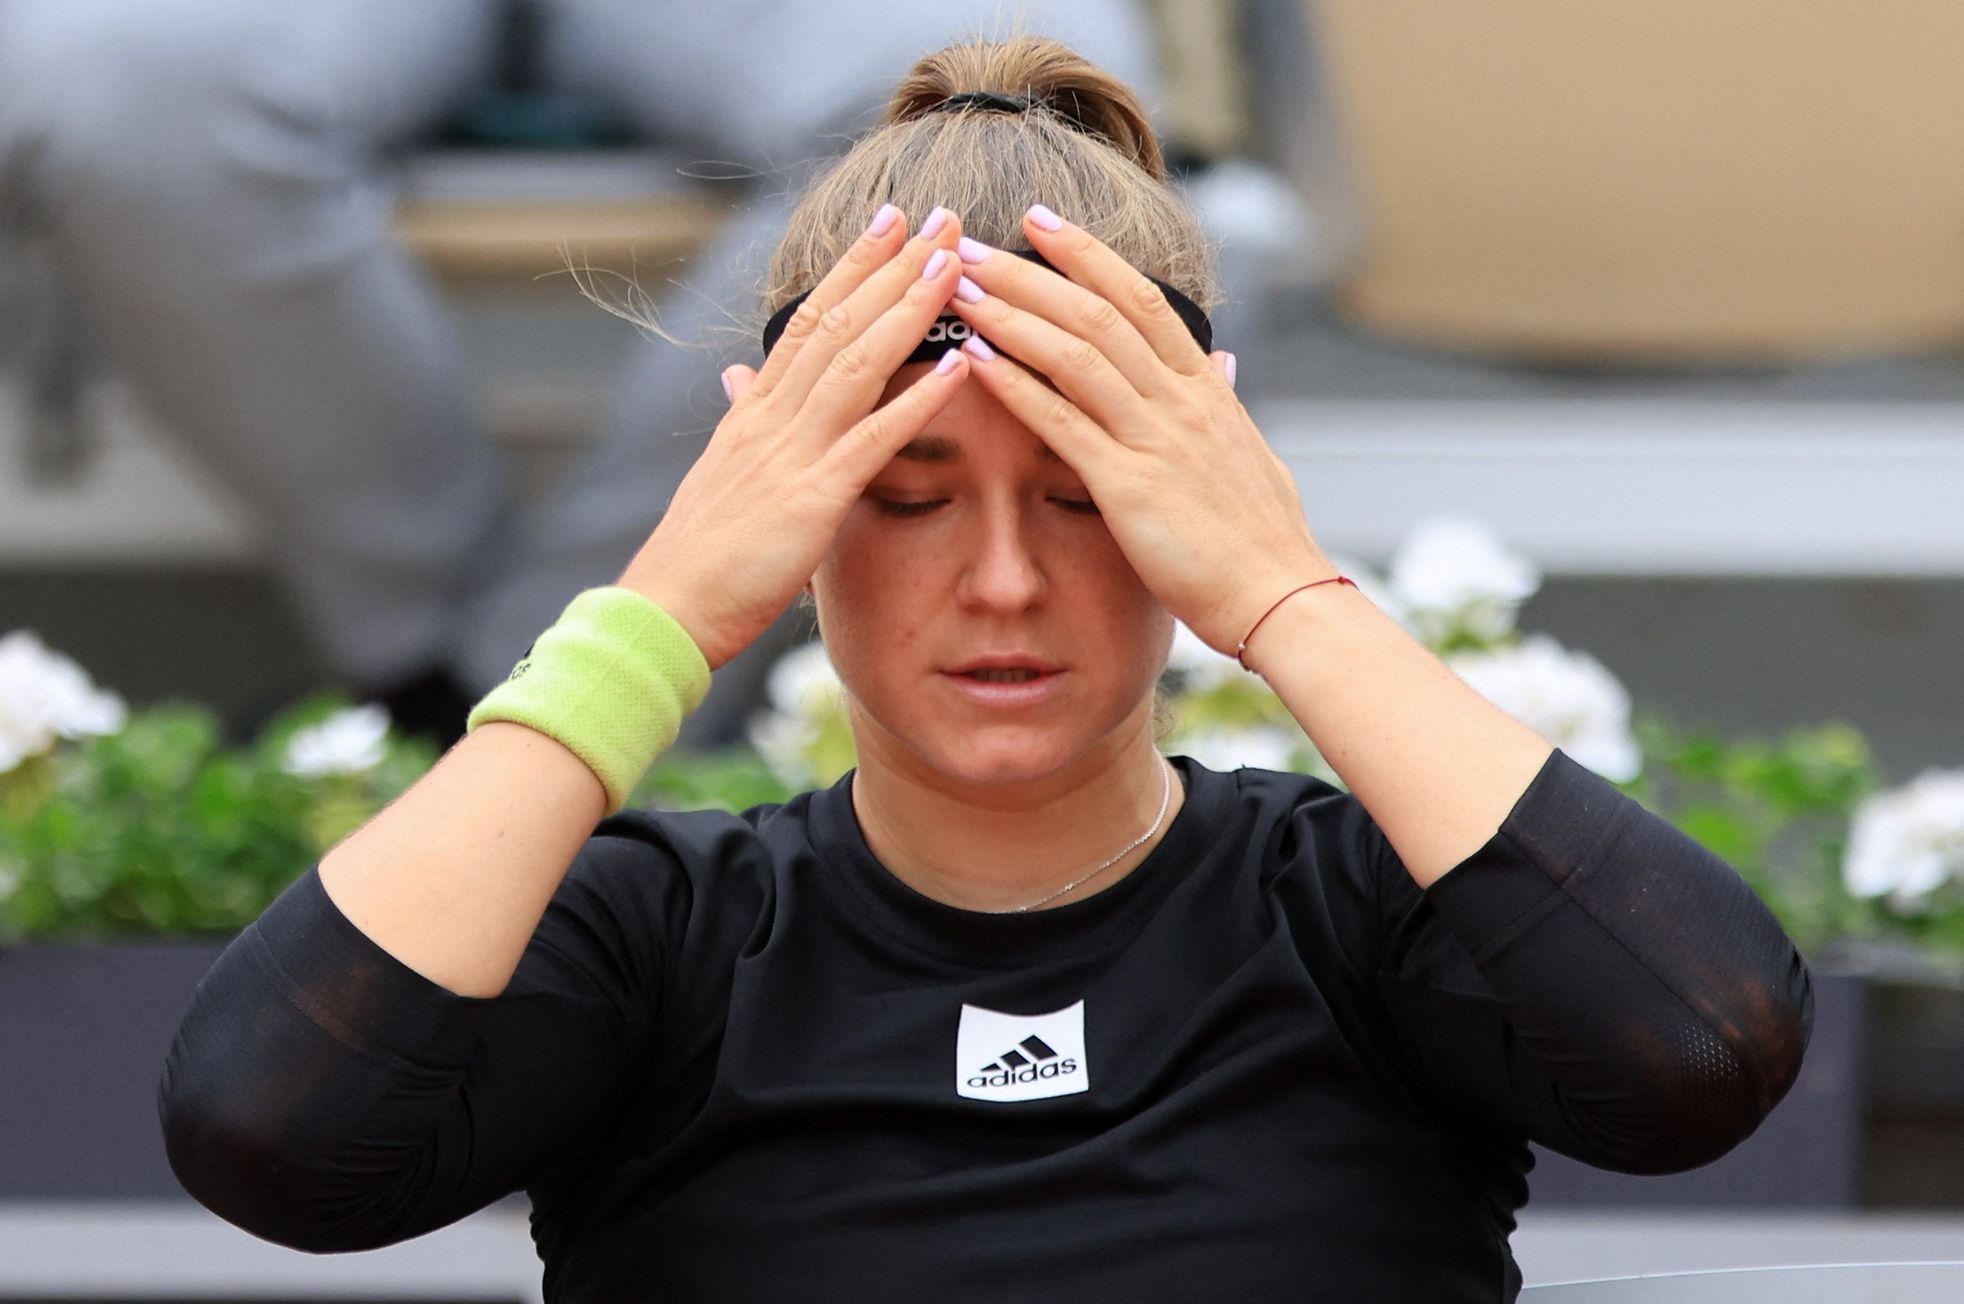 Kvitova was eliminated in the Doha tournament with 18-year-old Gauff